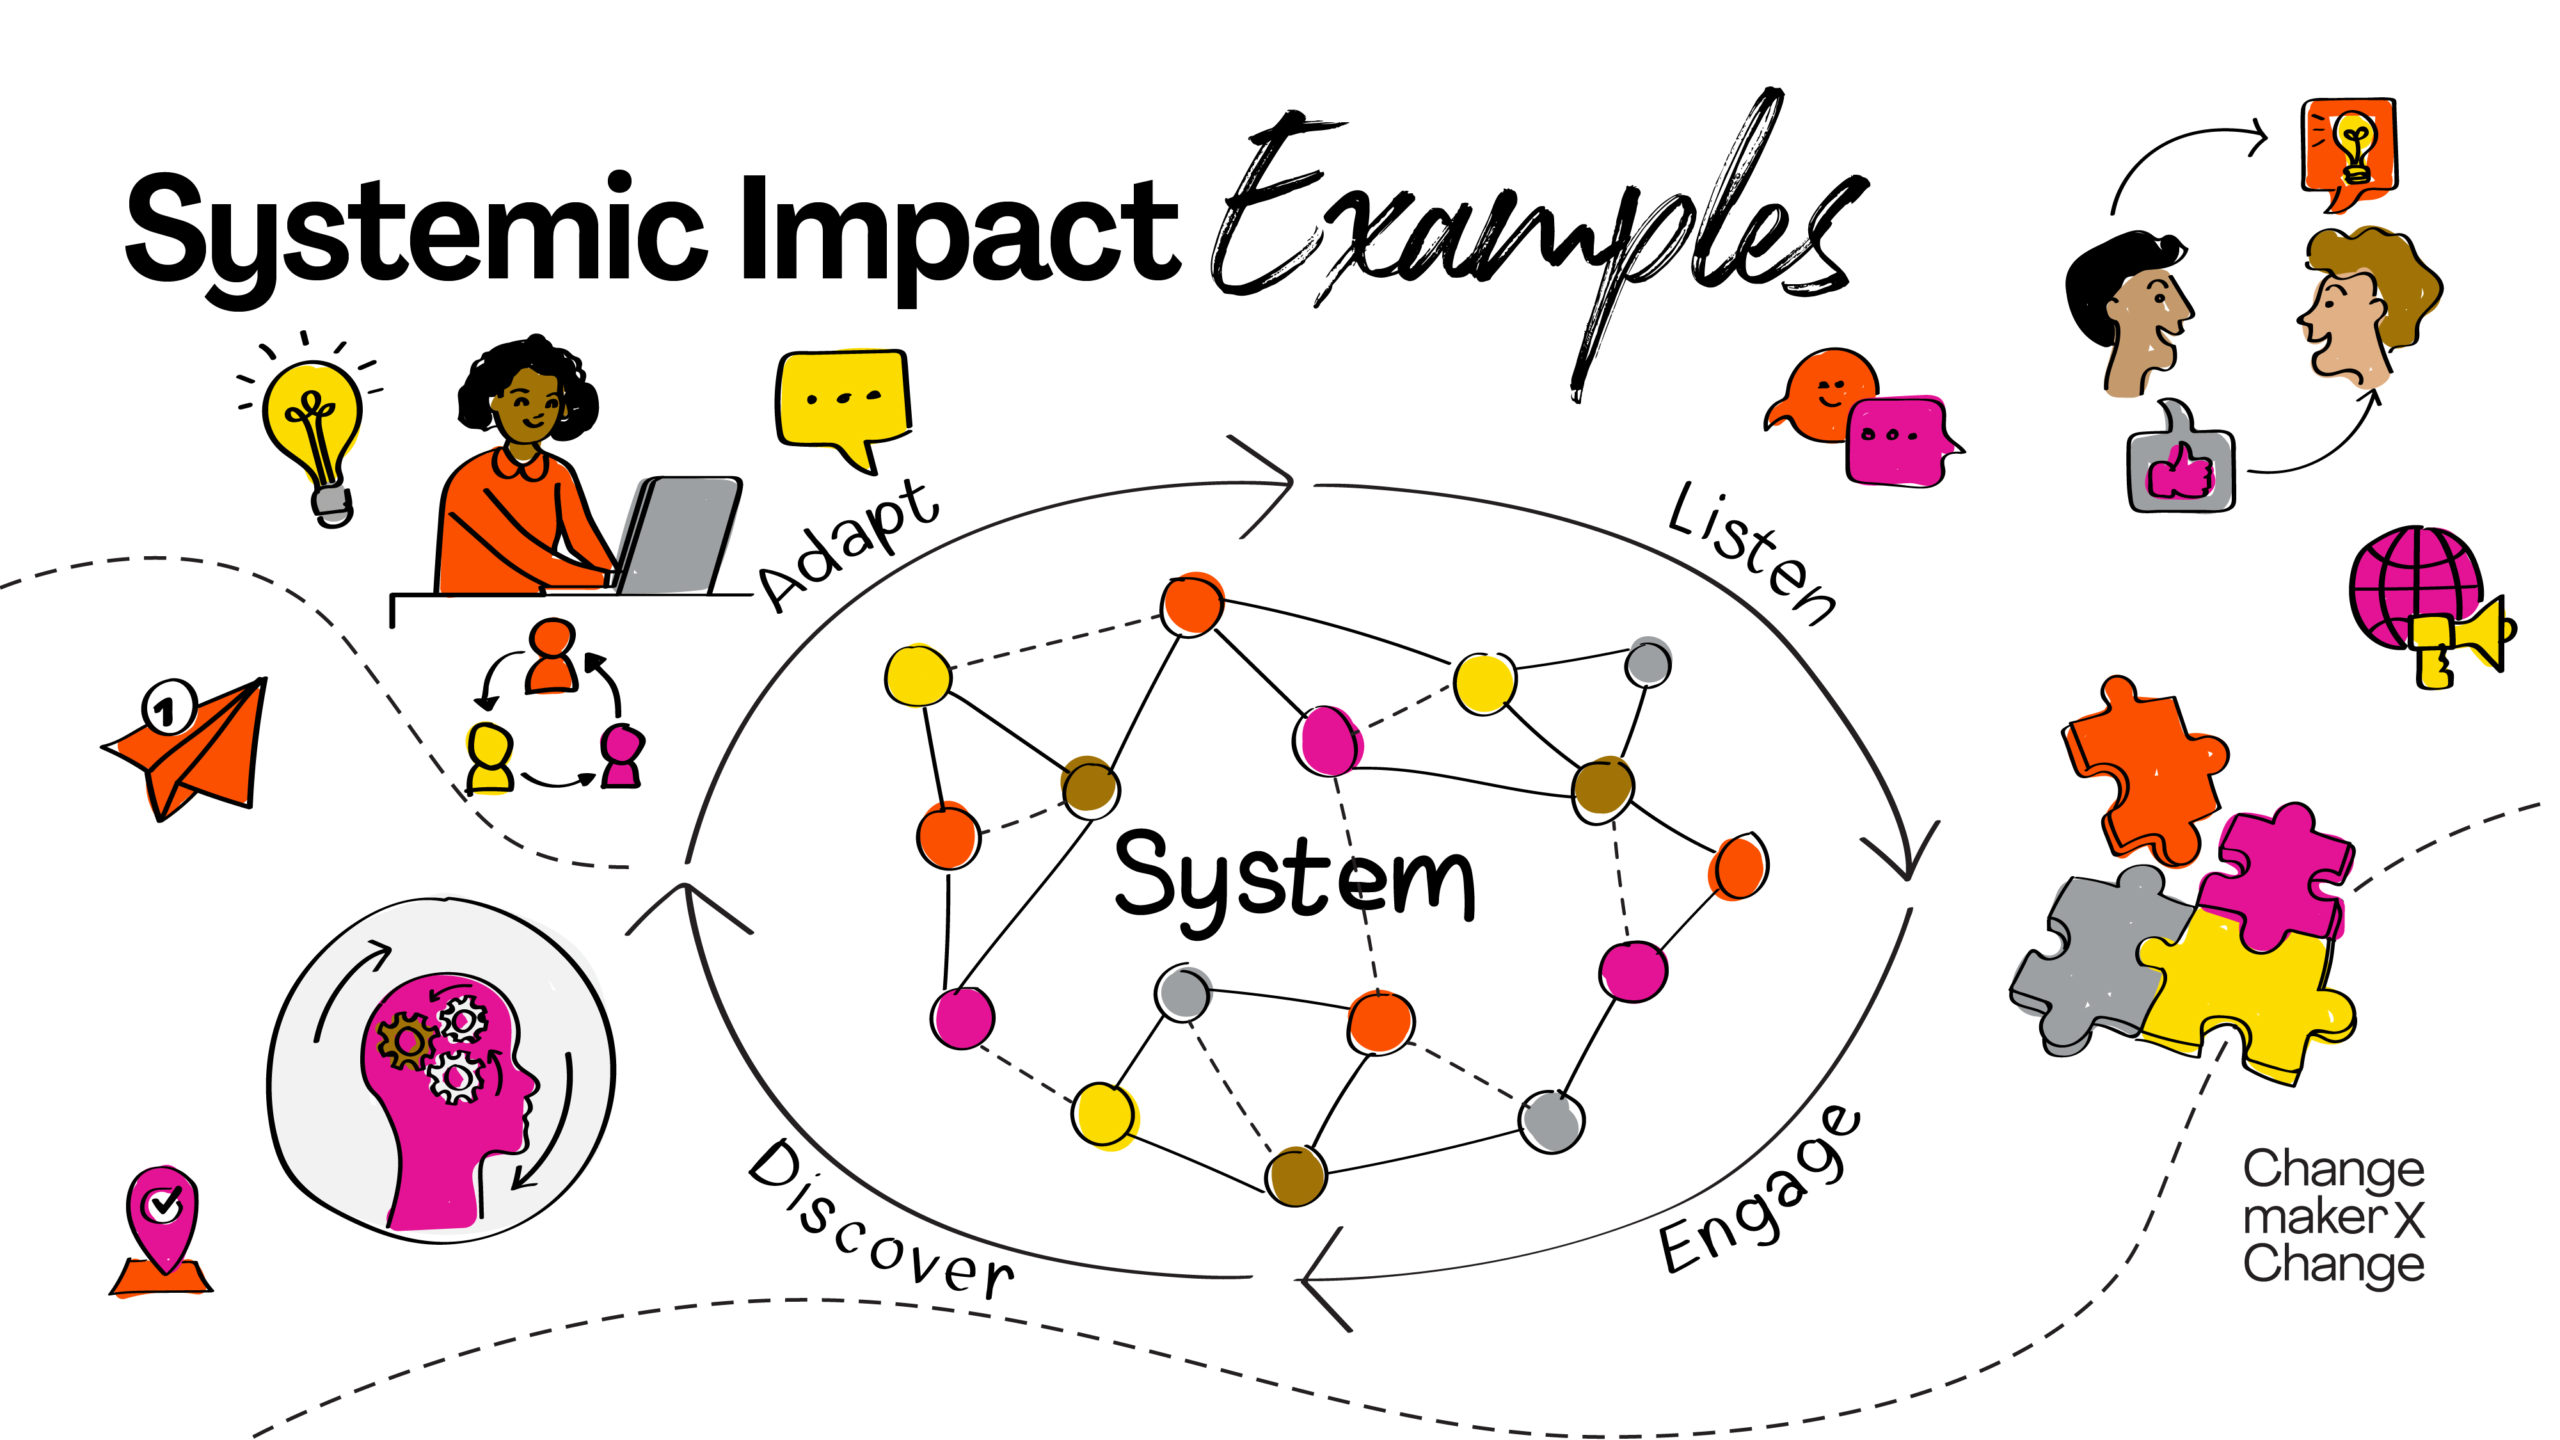 ChangemakerXchange Systemic Impact Resources